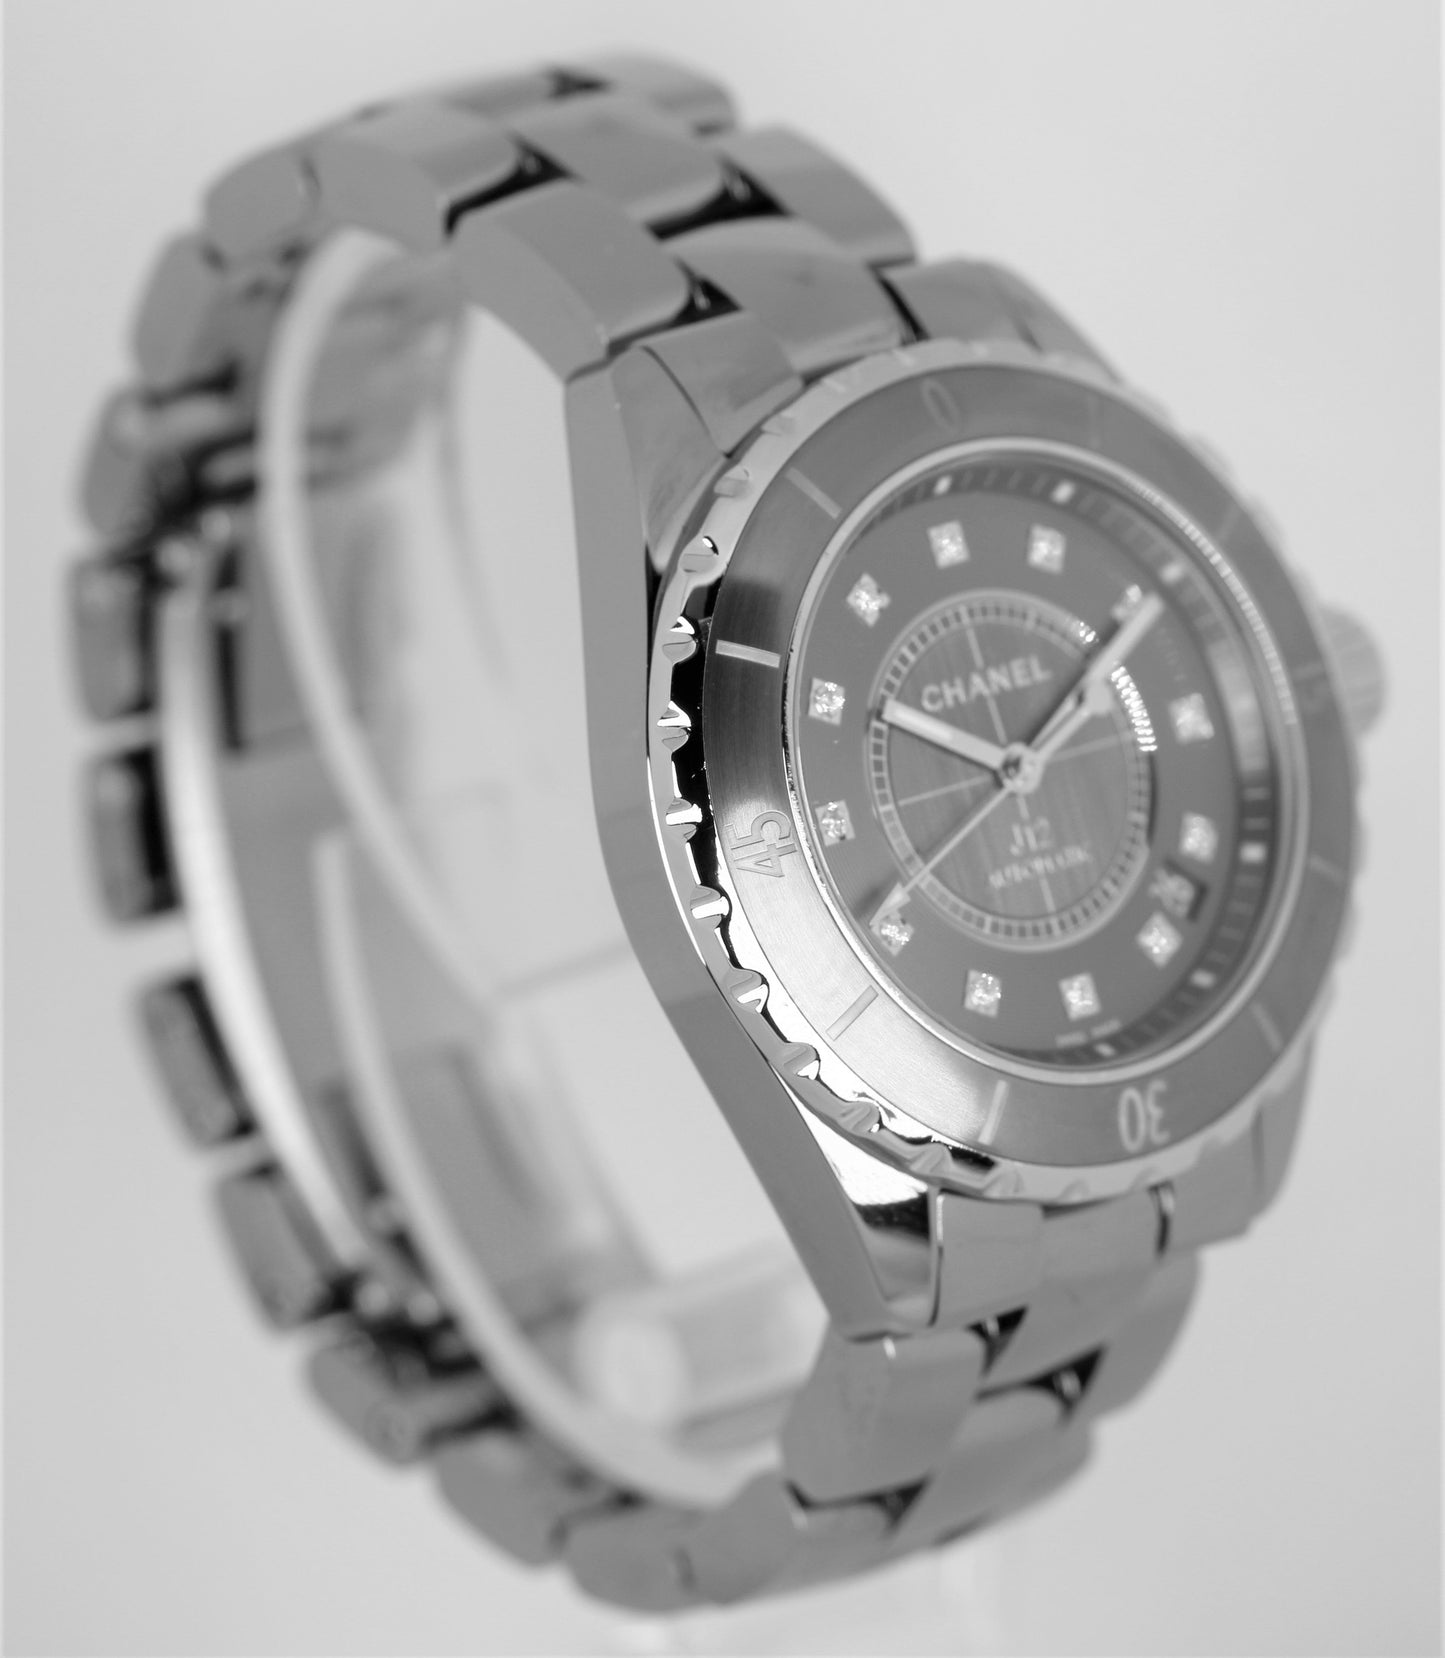 Chanel J12 Ceramic Titanium Gray DIAMOND 38mm Automatic H3242 Watch